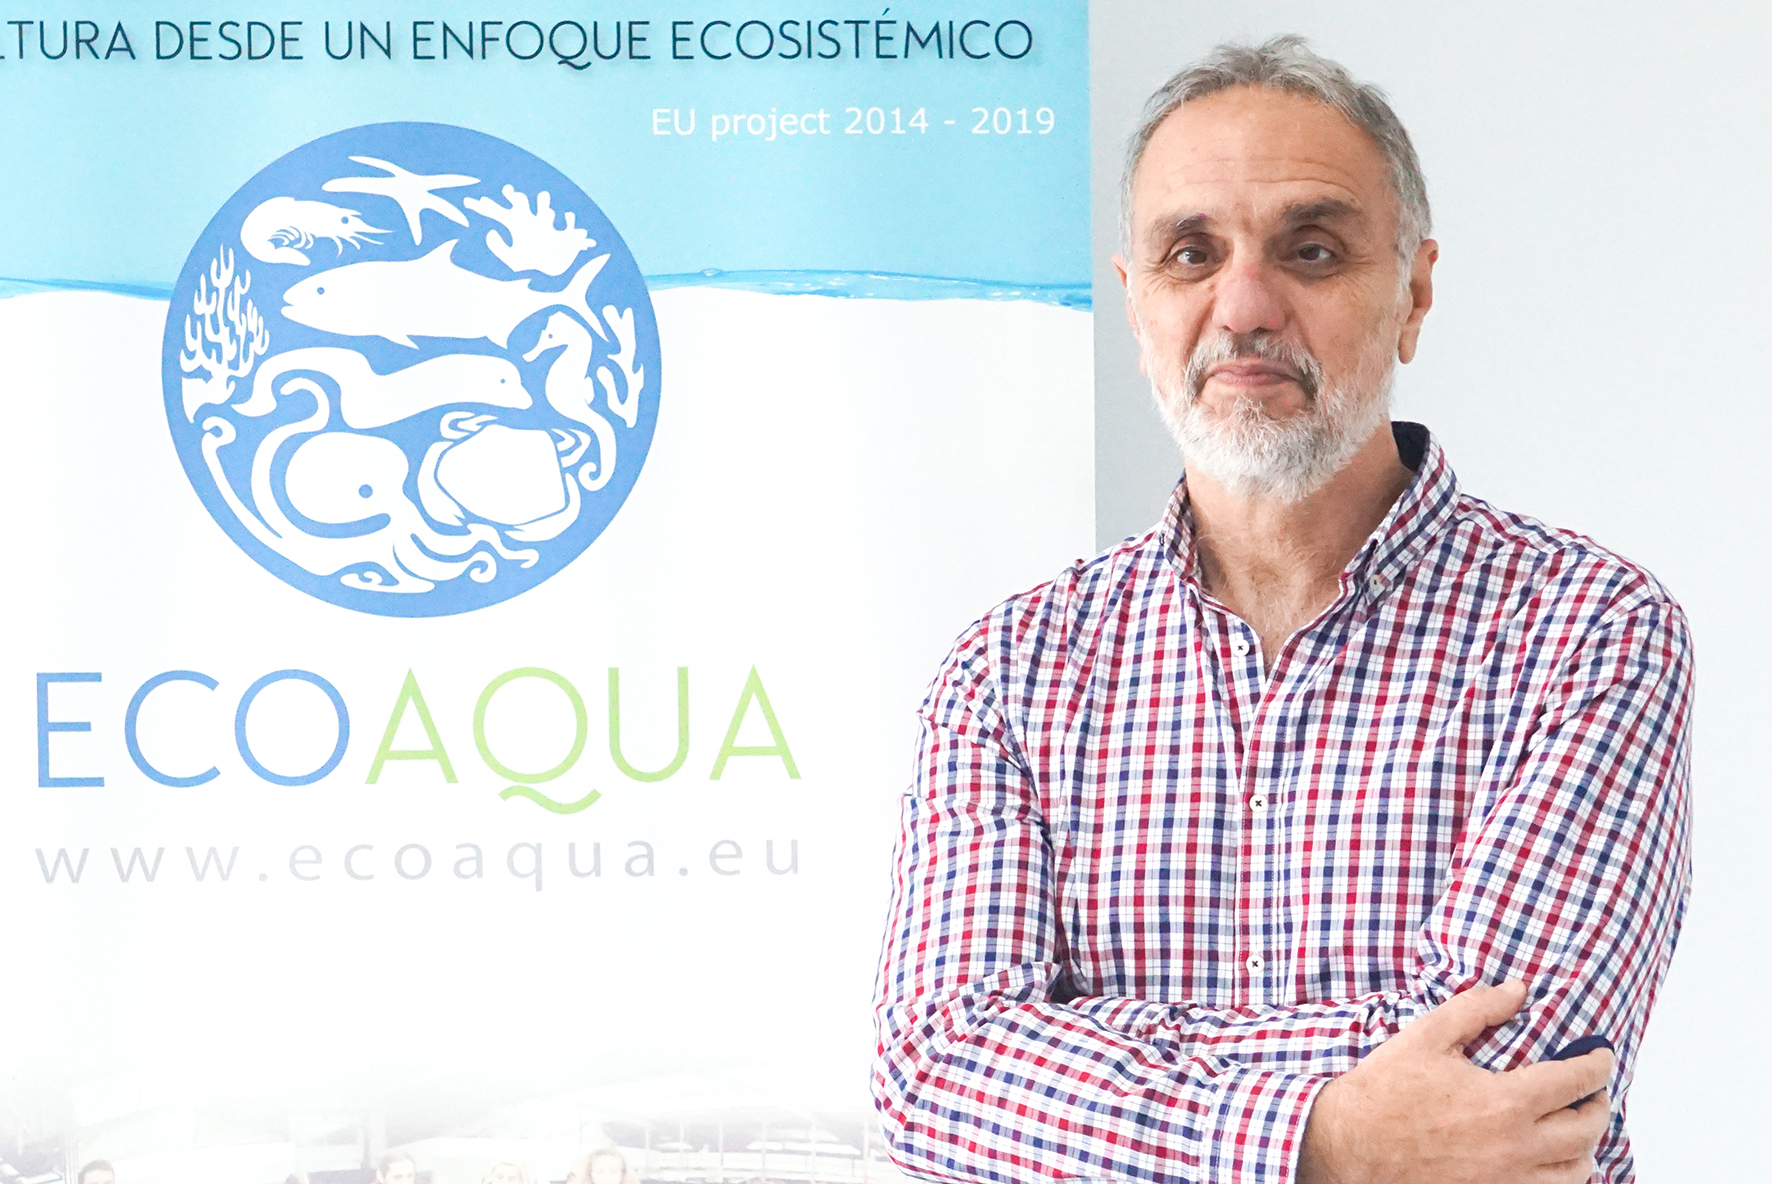 Ricardo Haroun will be the director of IU-ECOAQUA for the next four years